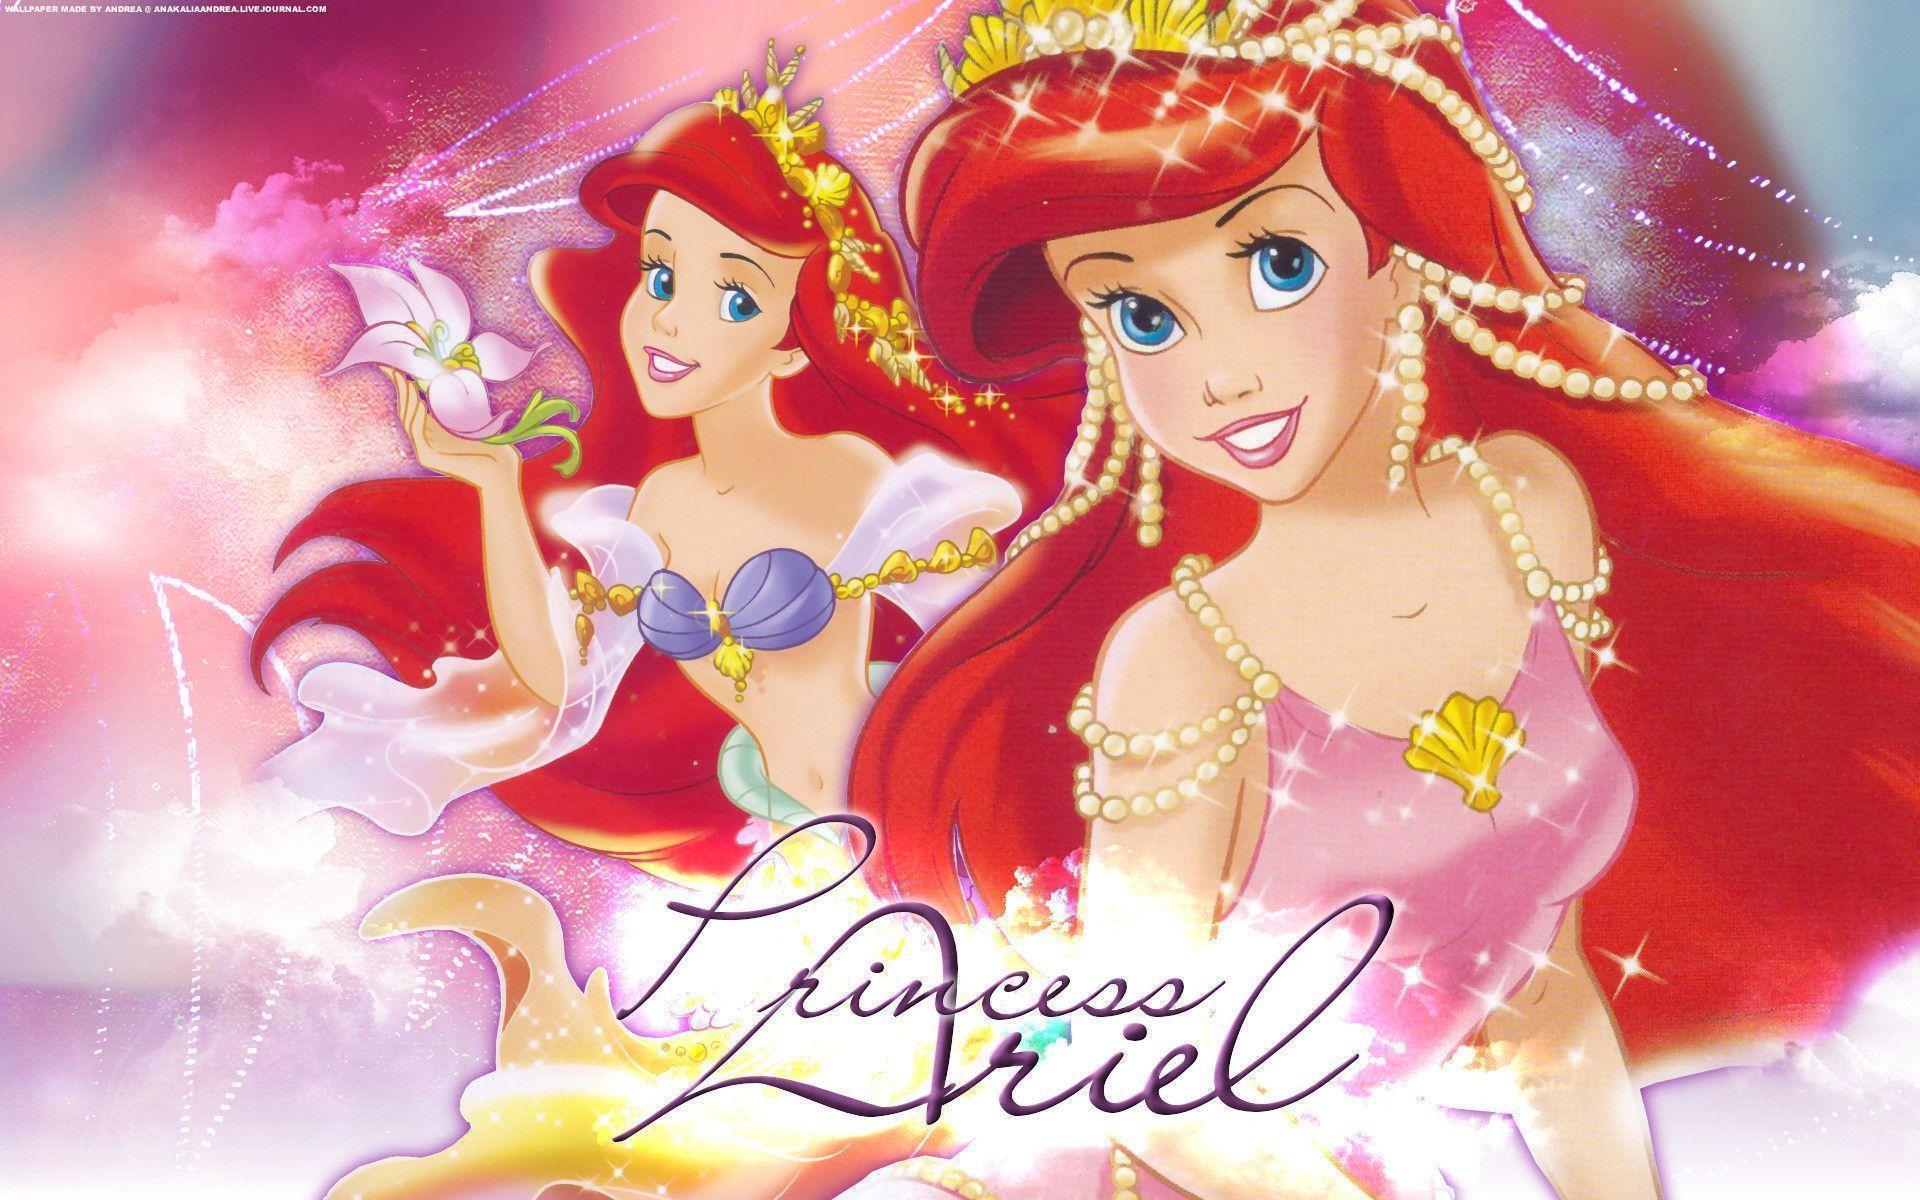 Princess Ariel Little Mermaid Wallpaper